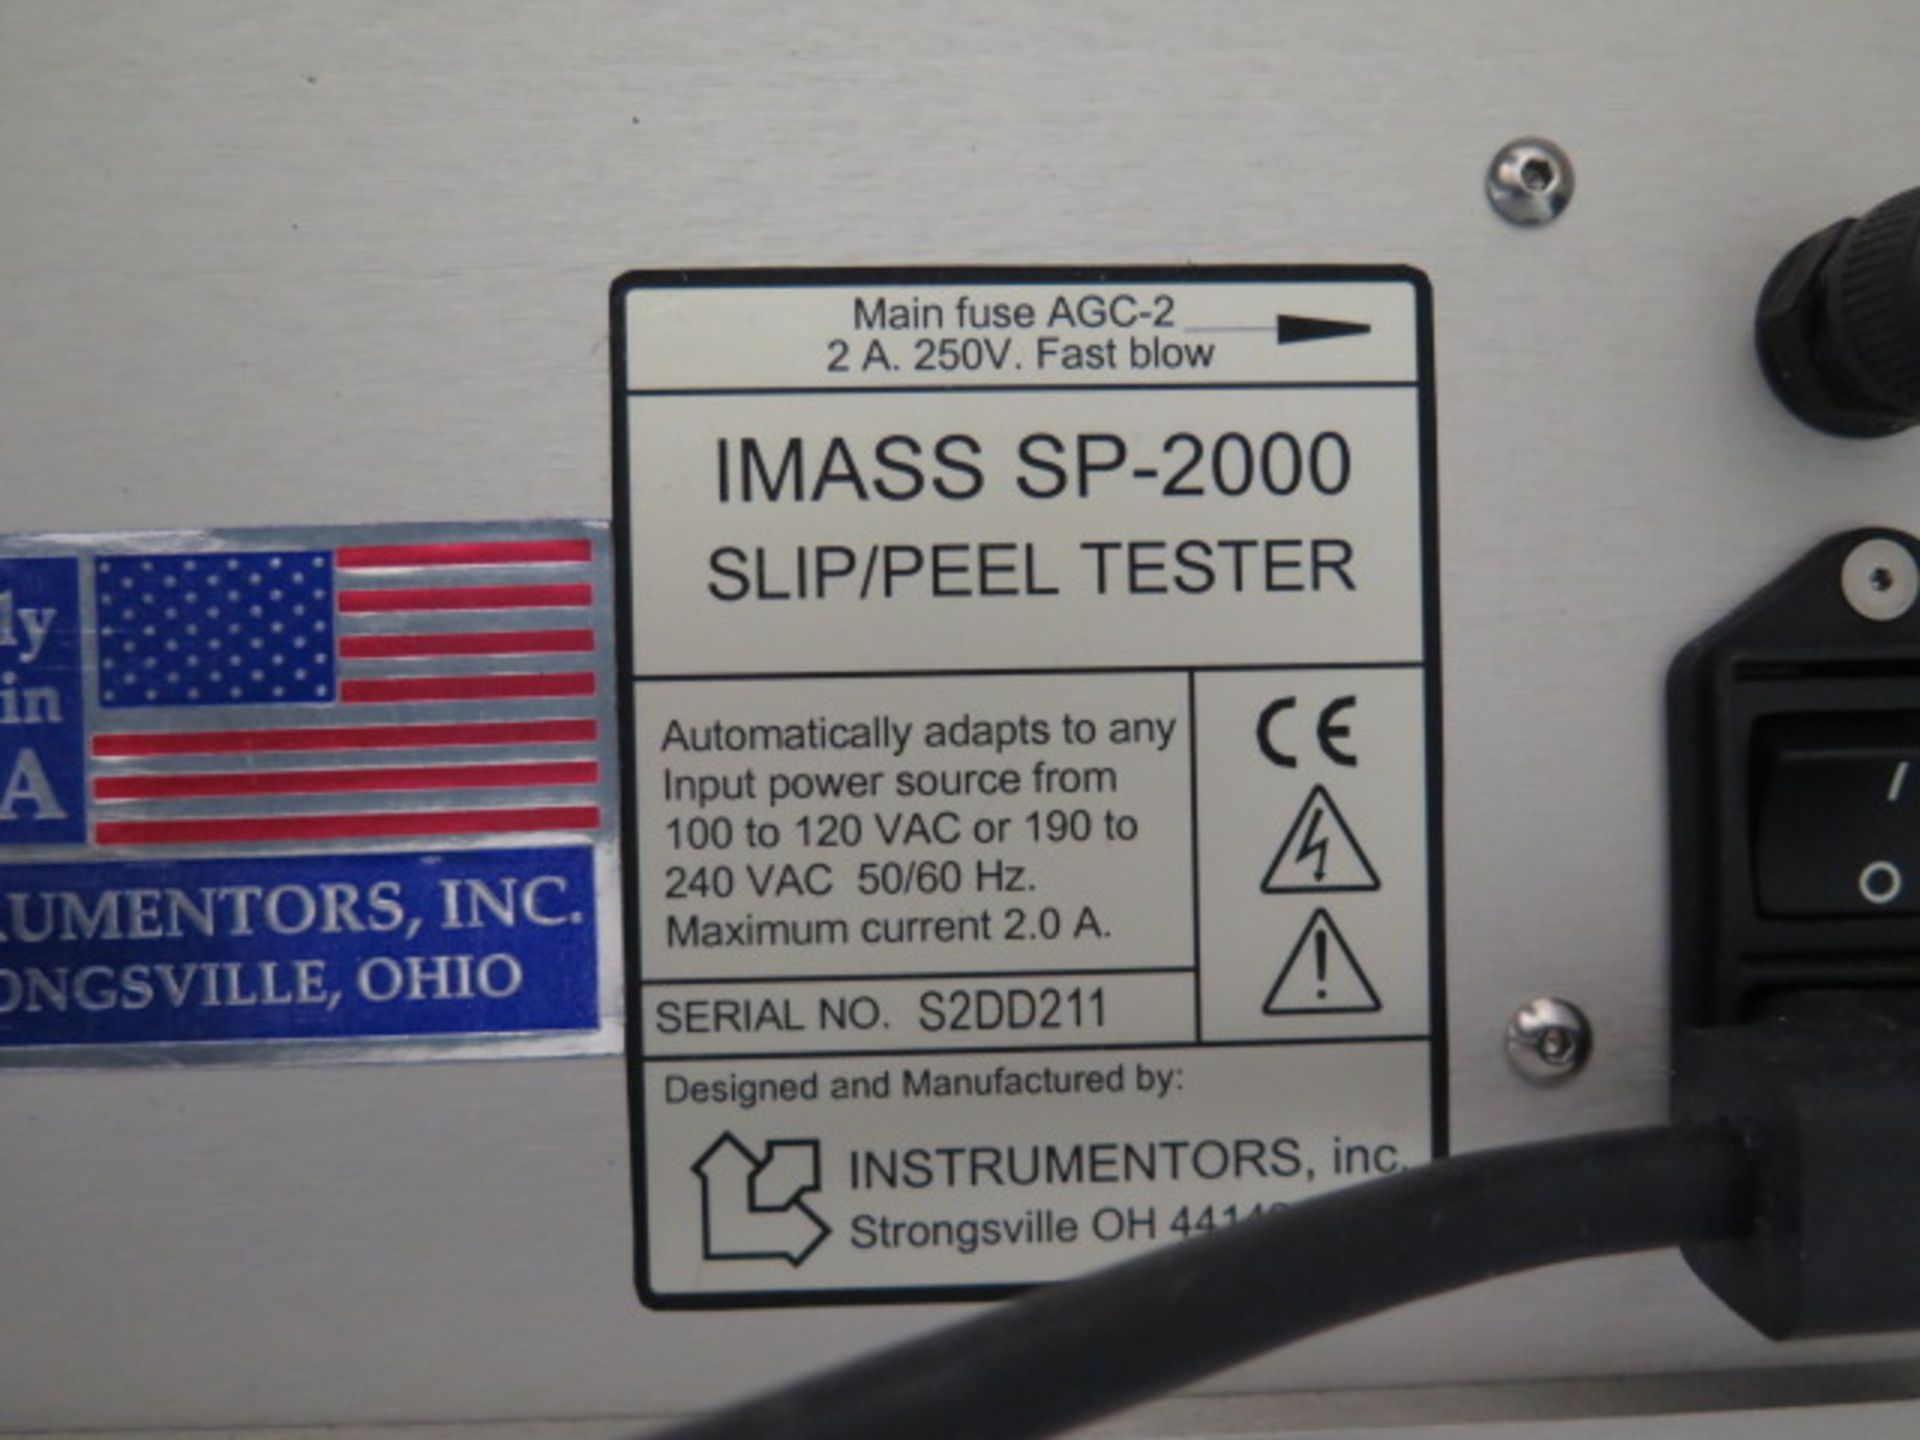 Imass SP-2000 Slip / Peel Tester s/n S2DD211 (SOLD AS-IS - NO WARRANTY) - Image 8 of 8